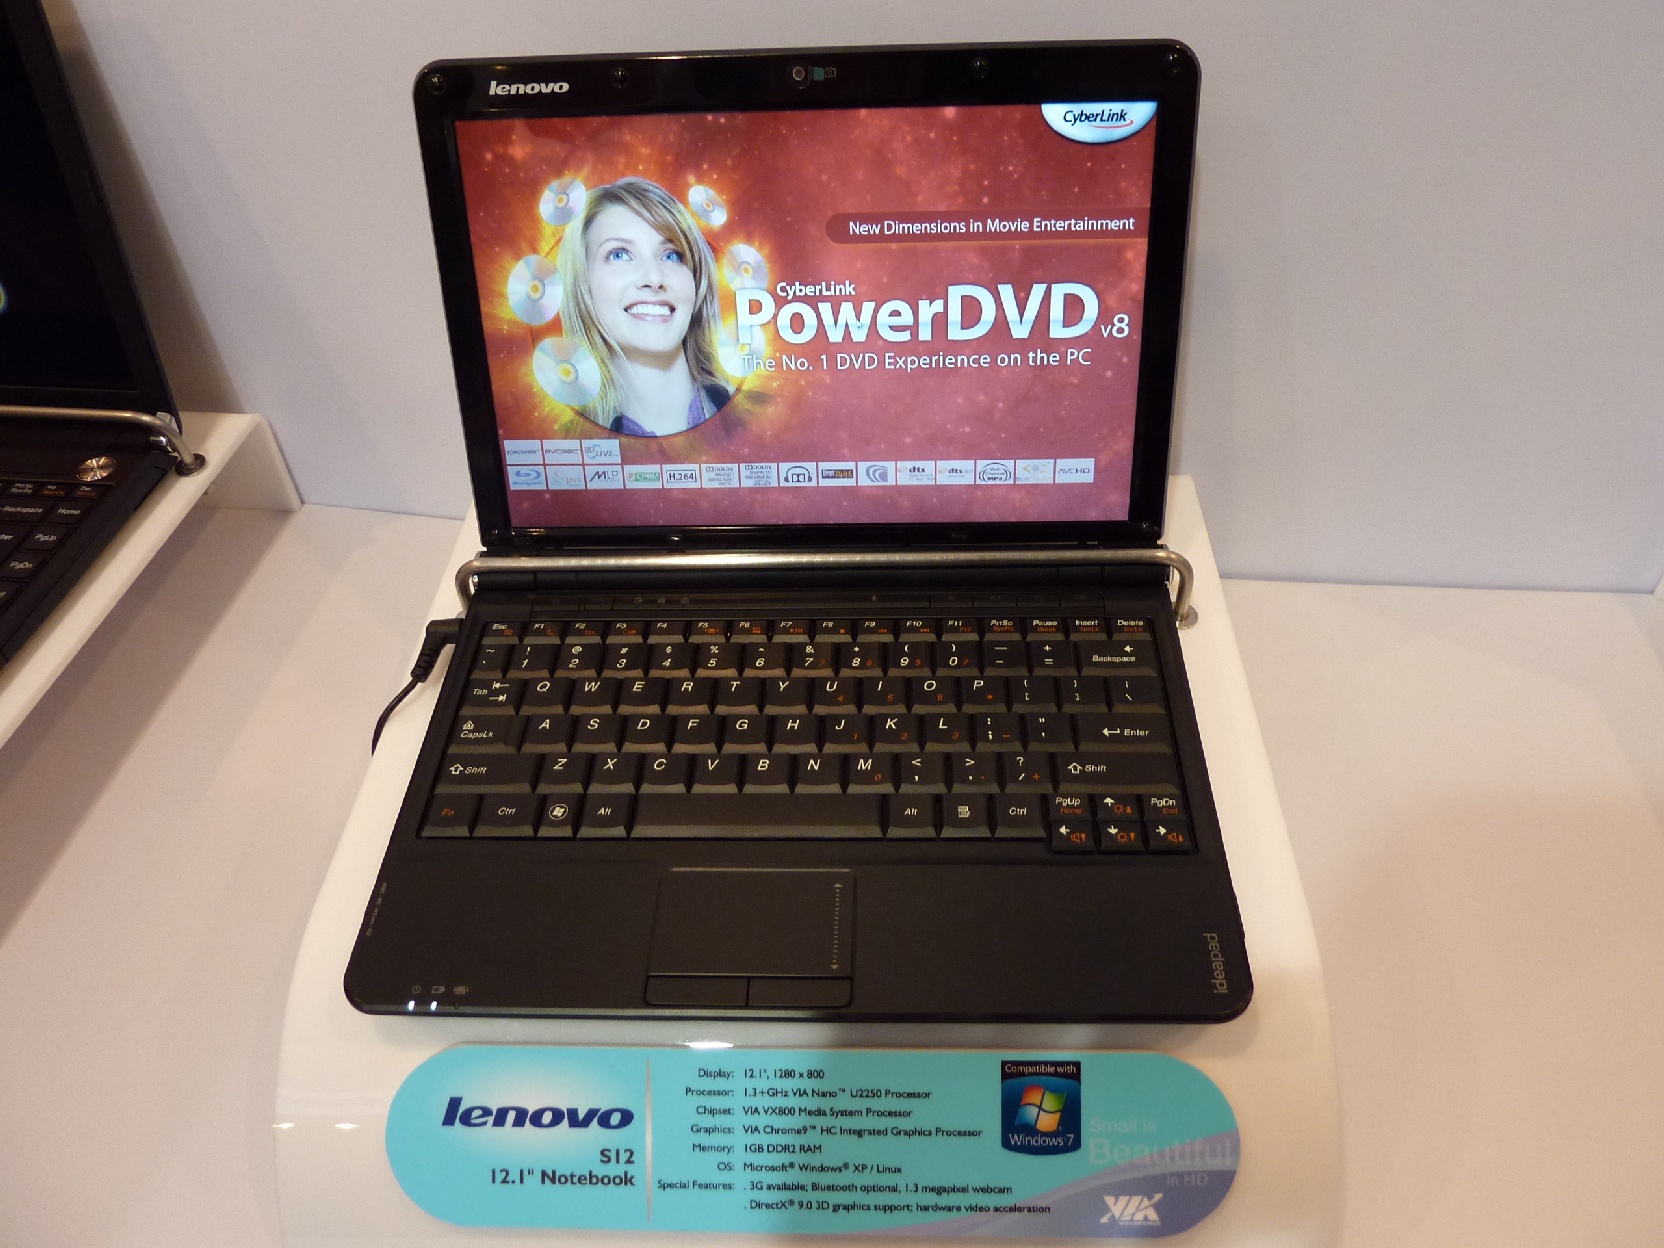 File:Lenovo ideapad S12.jpg